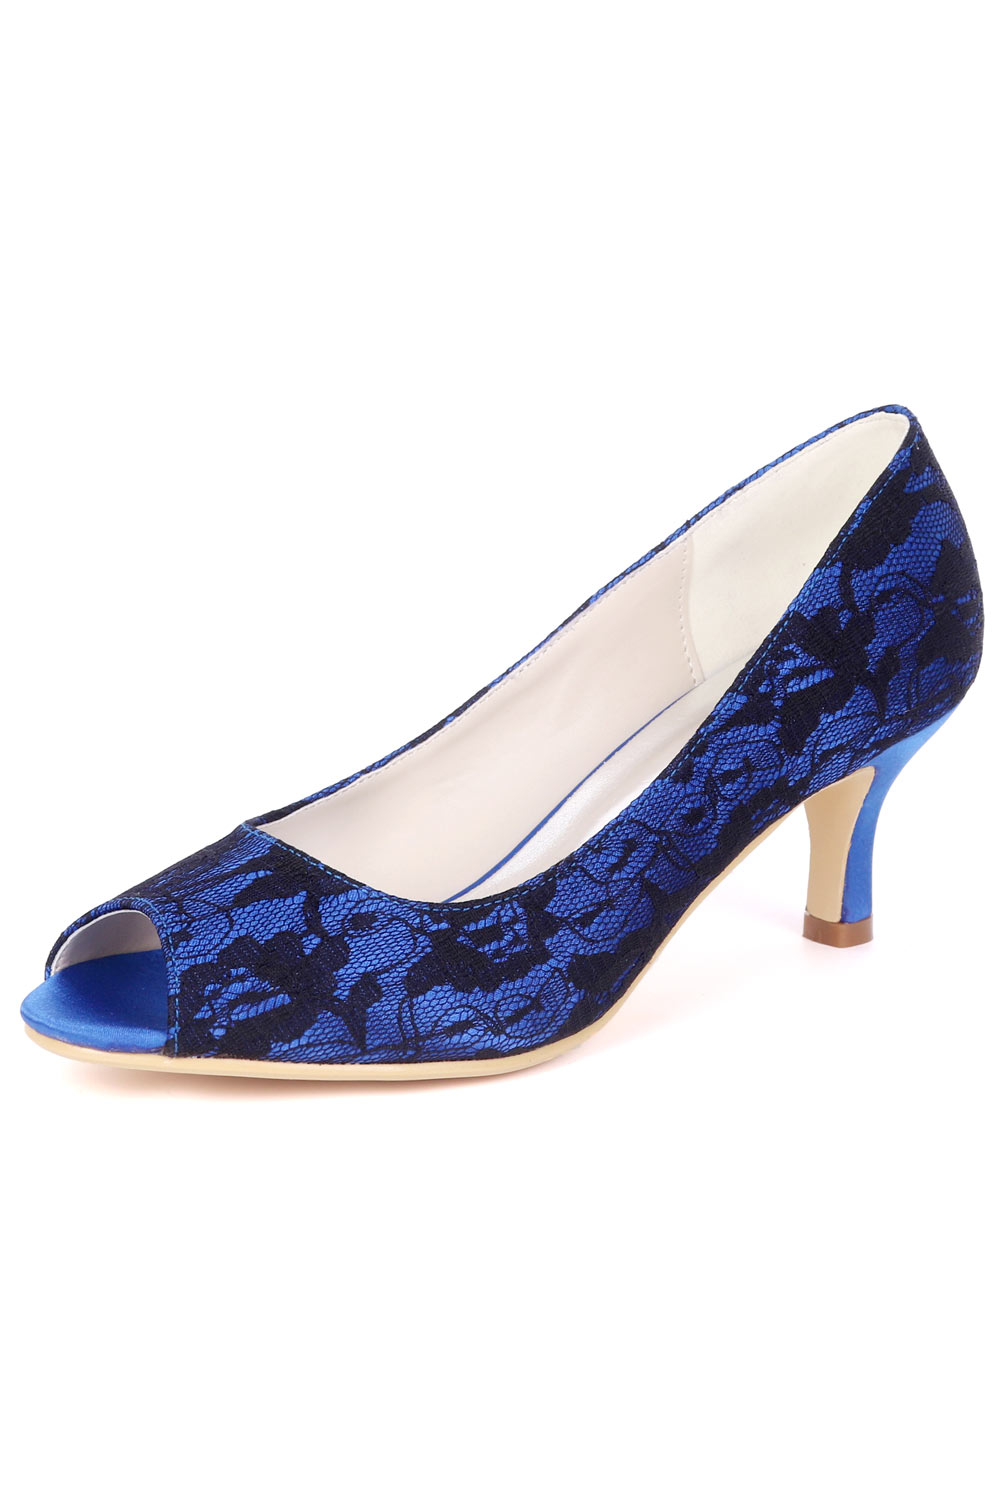 chaussures-mariage-dentelle-bleu-noir-talon-bas.jpg?profile=RESIZE_584x